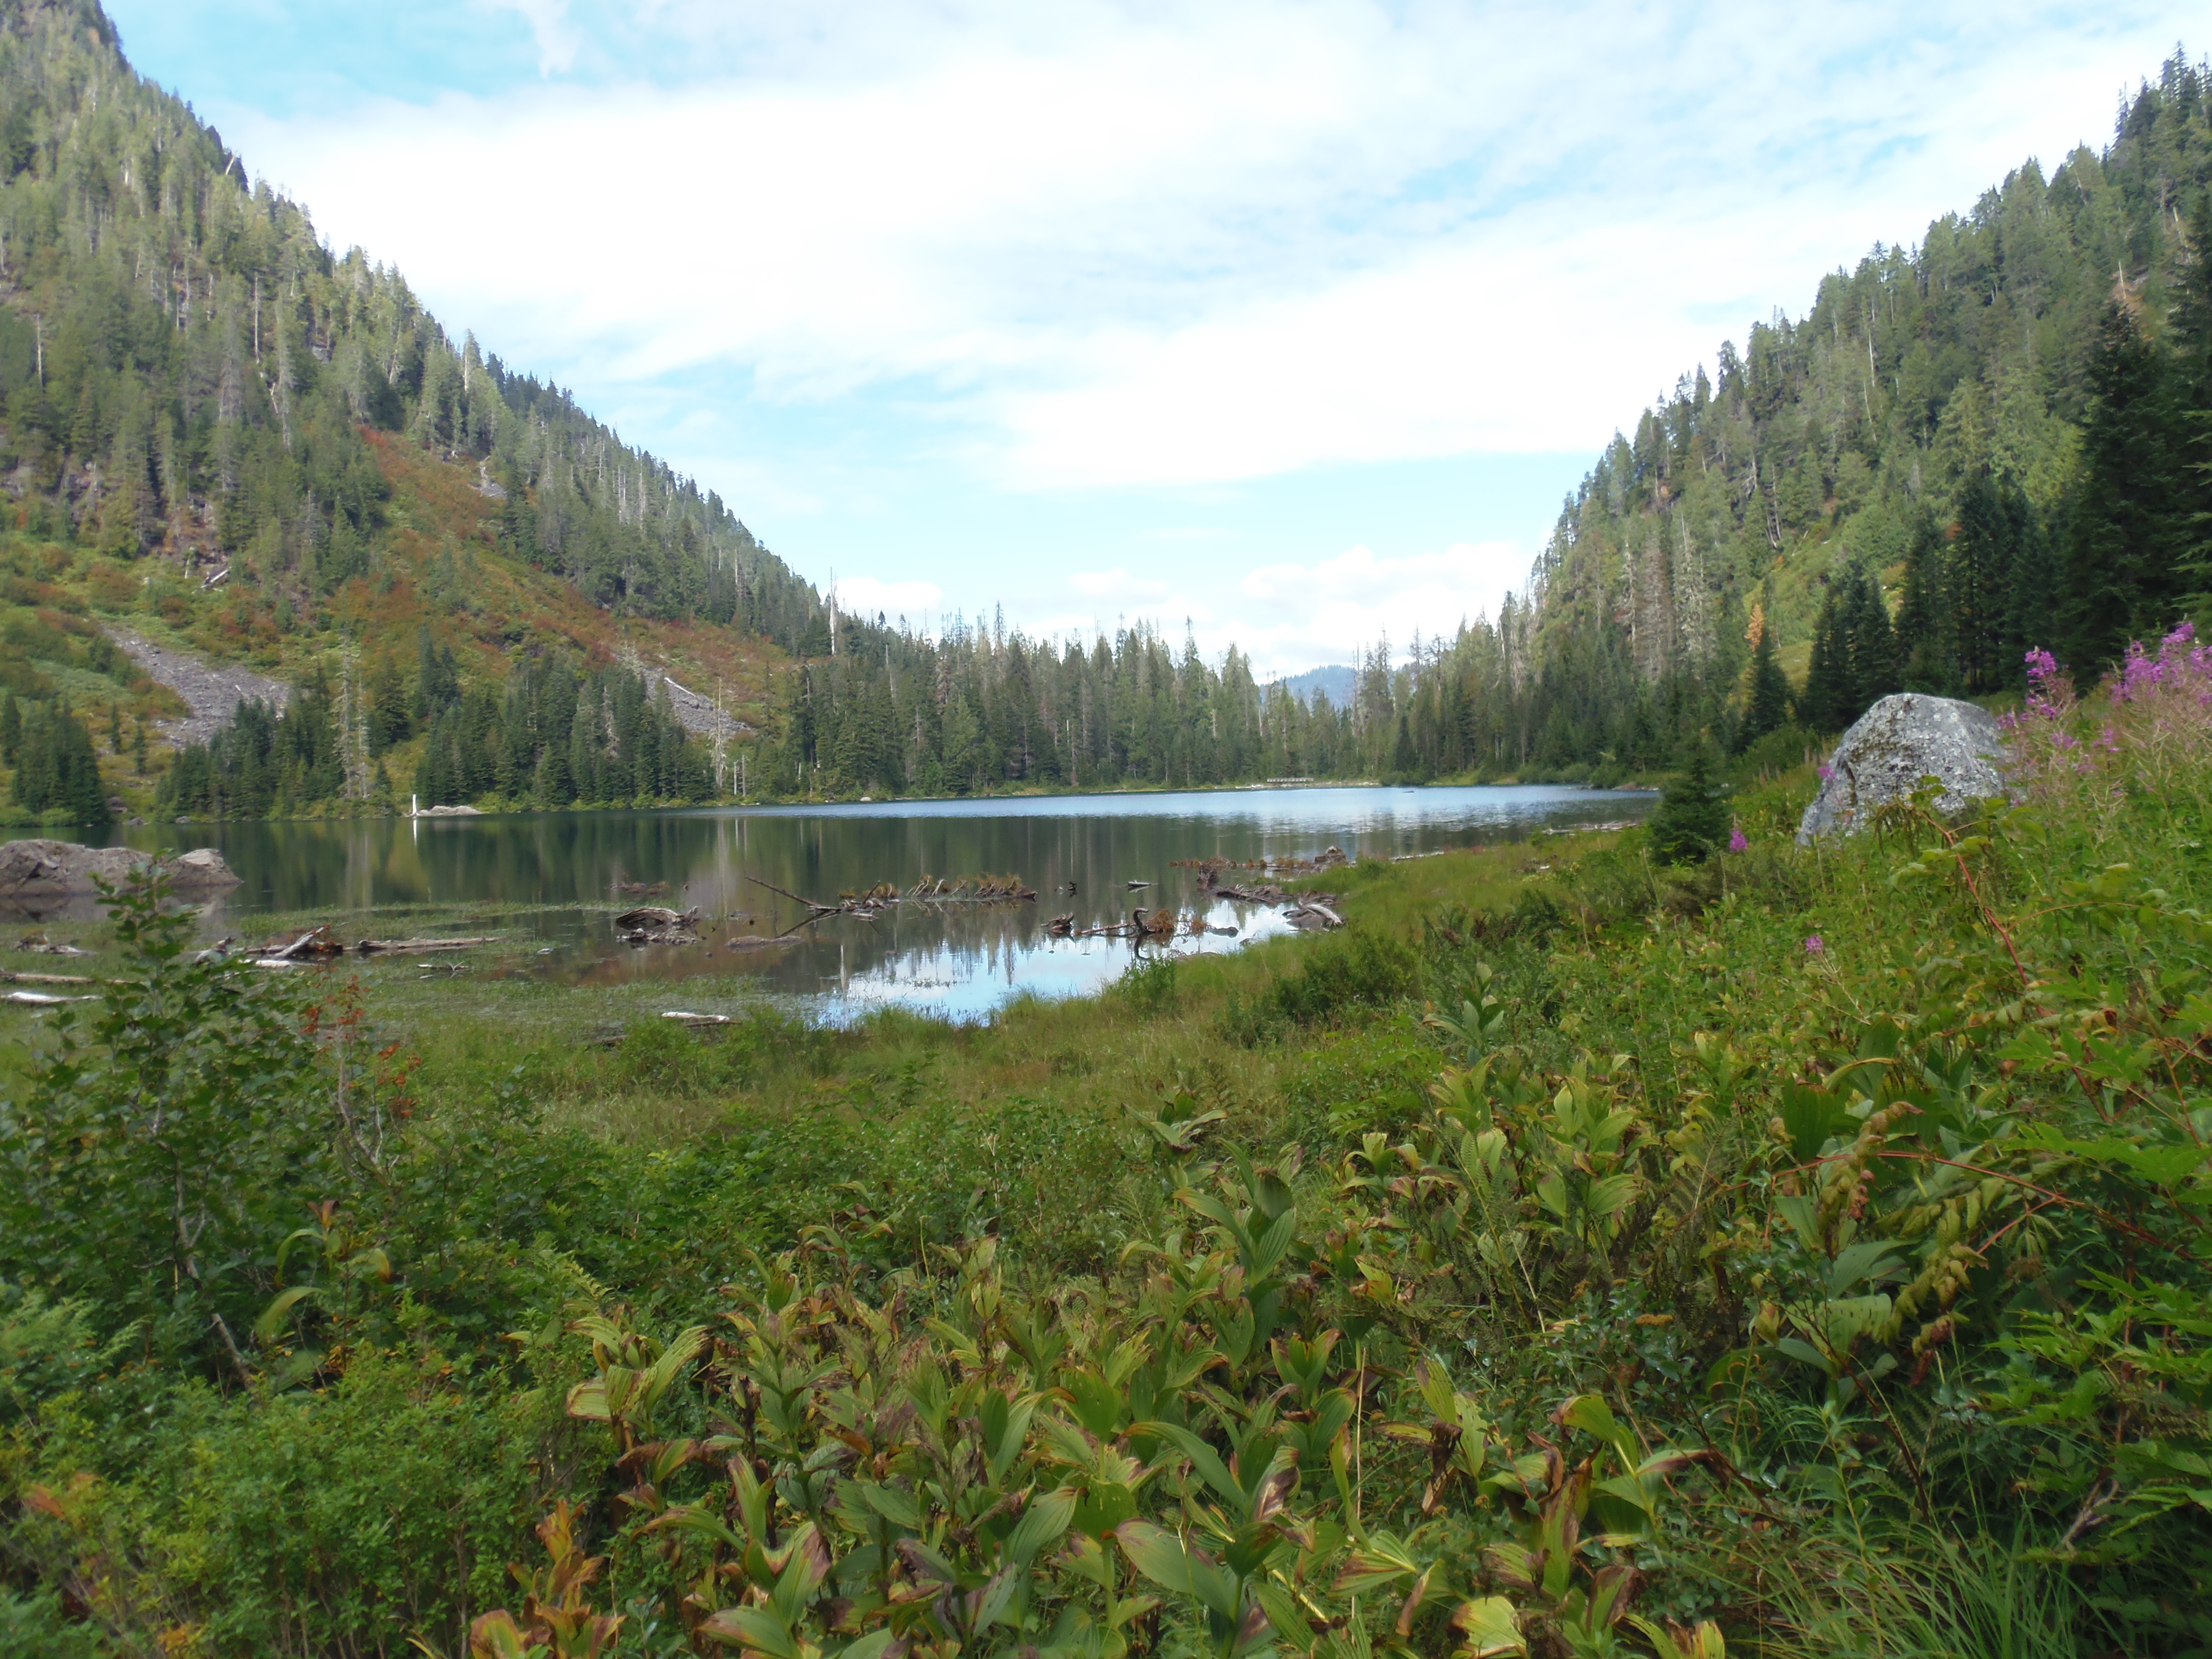 A small, still alpine lake among forest